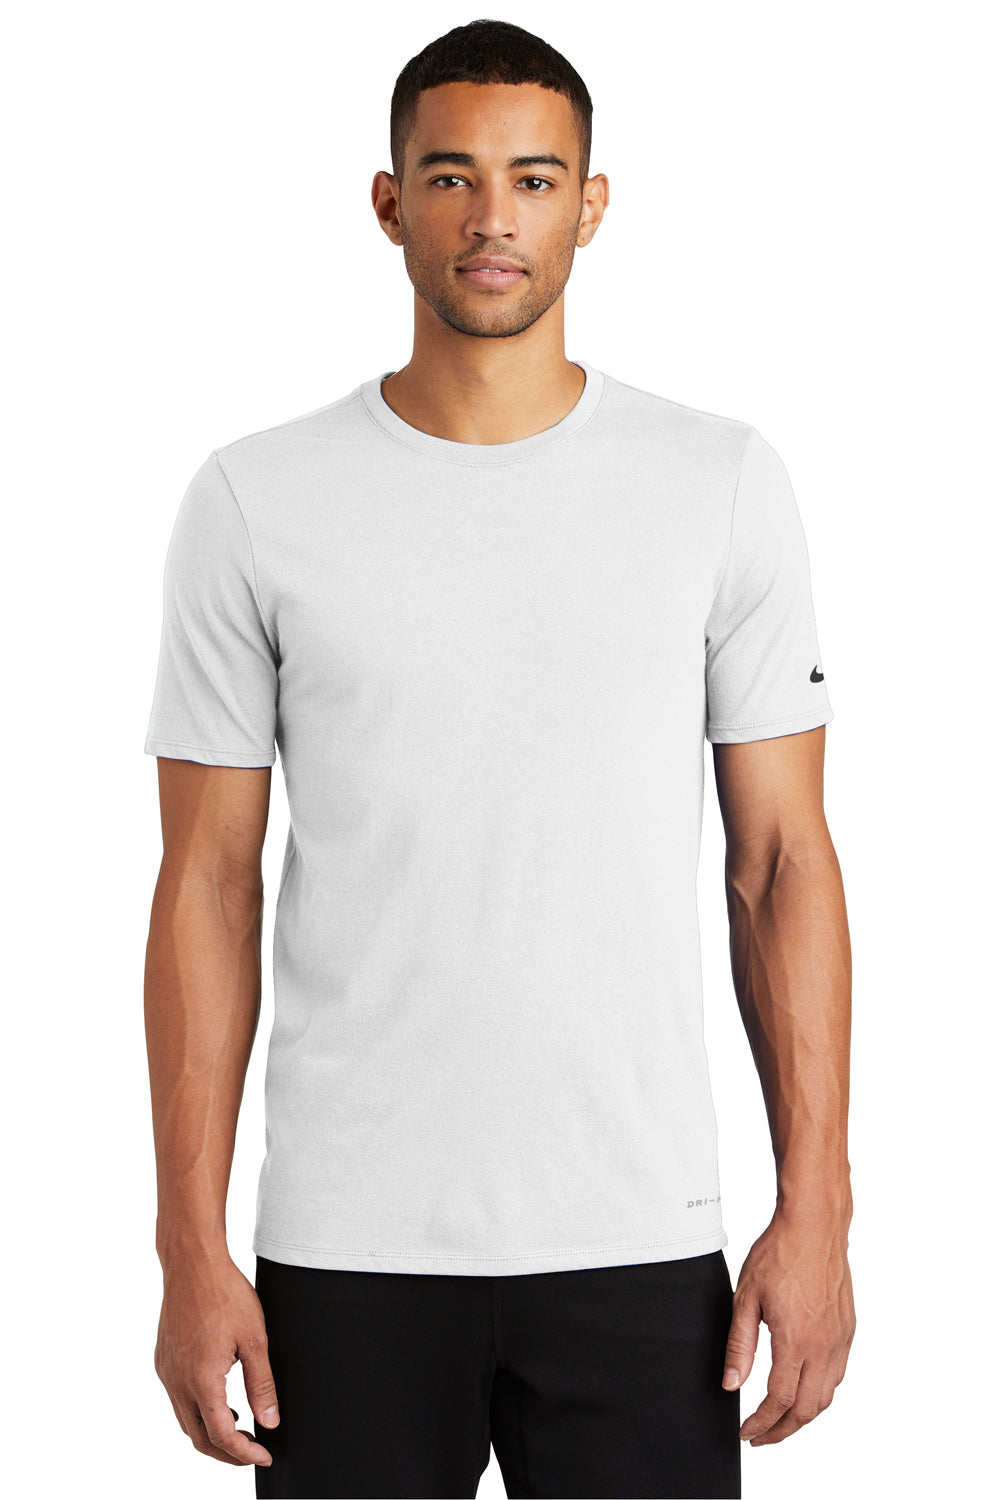 Nike NKBQ5231 Mens Dri-Fit Moisture Wicking Short Sleeve Crewneck T-Shirt White Model Front